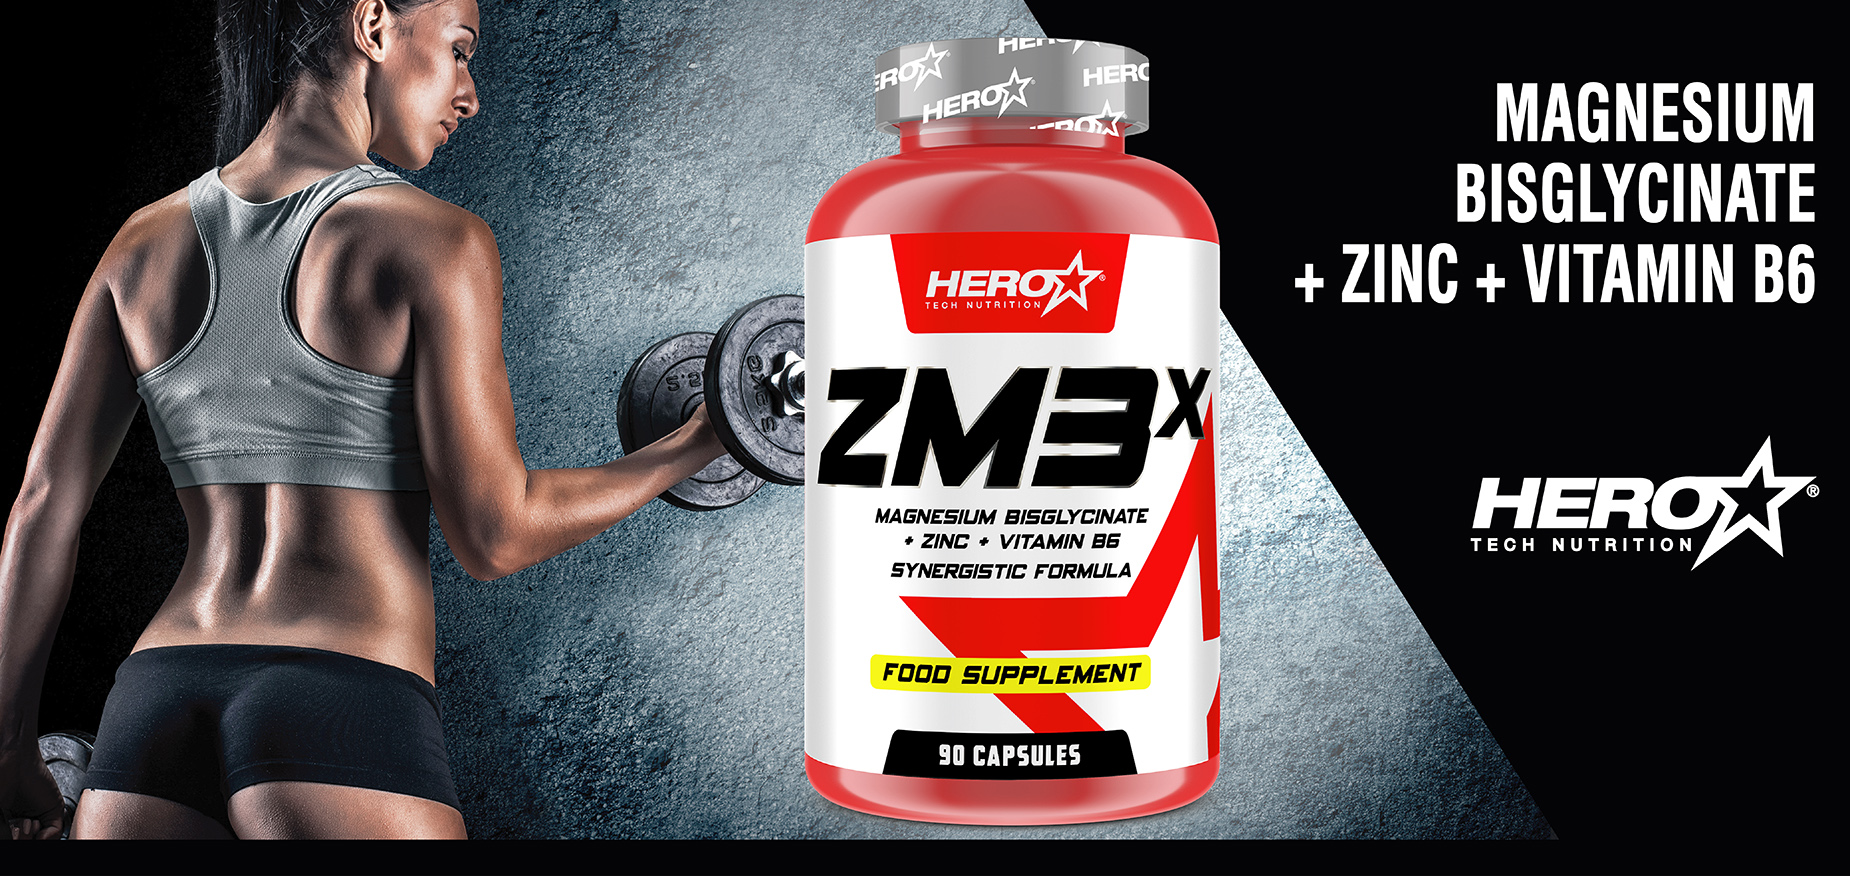 ZM3X ZINC MAGNESIUM B6 HERO TECH NUTRITION herotechnutrition